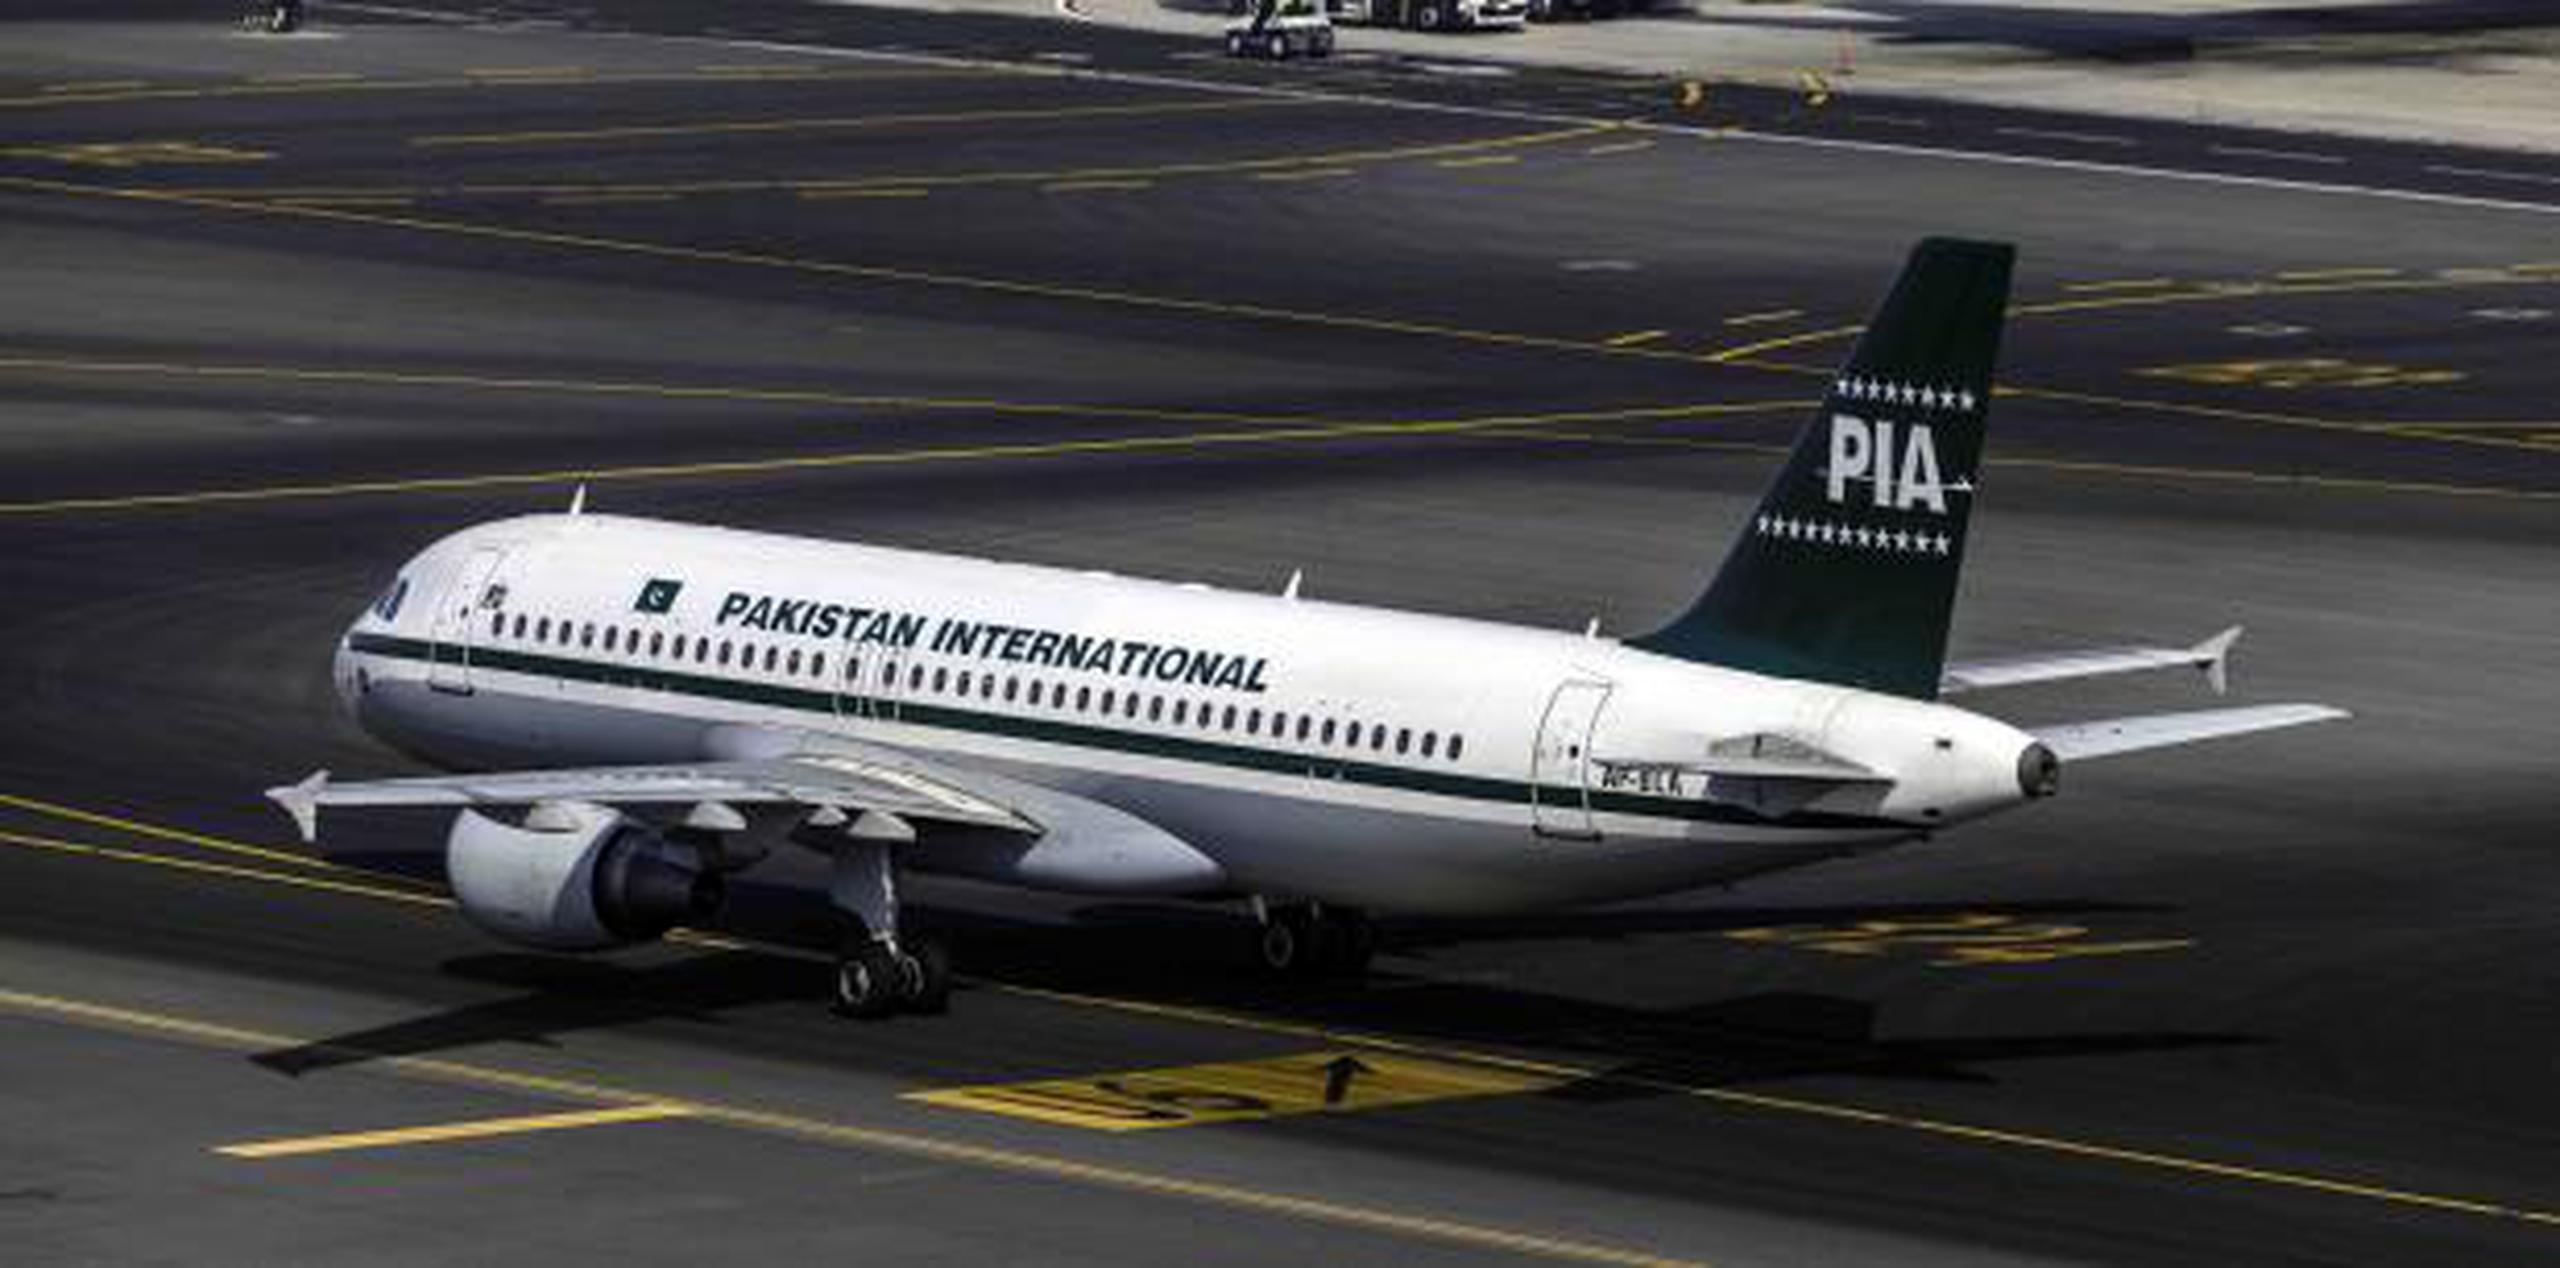 El incidente ocurrió en un avión de Pakistan International Airlines. (Shutterstock)